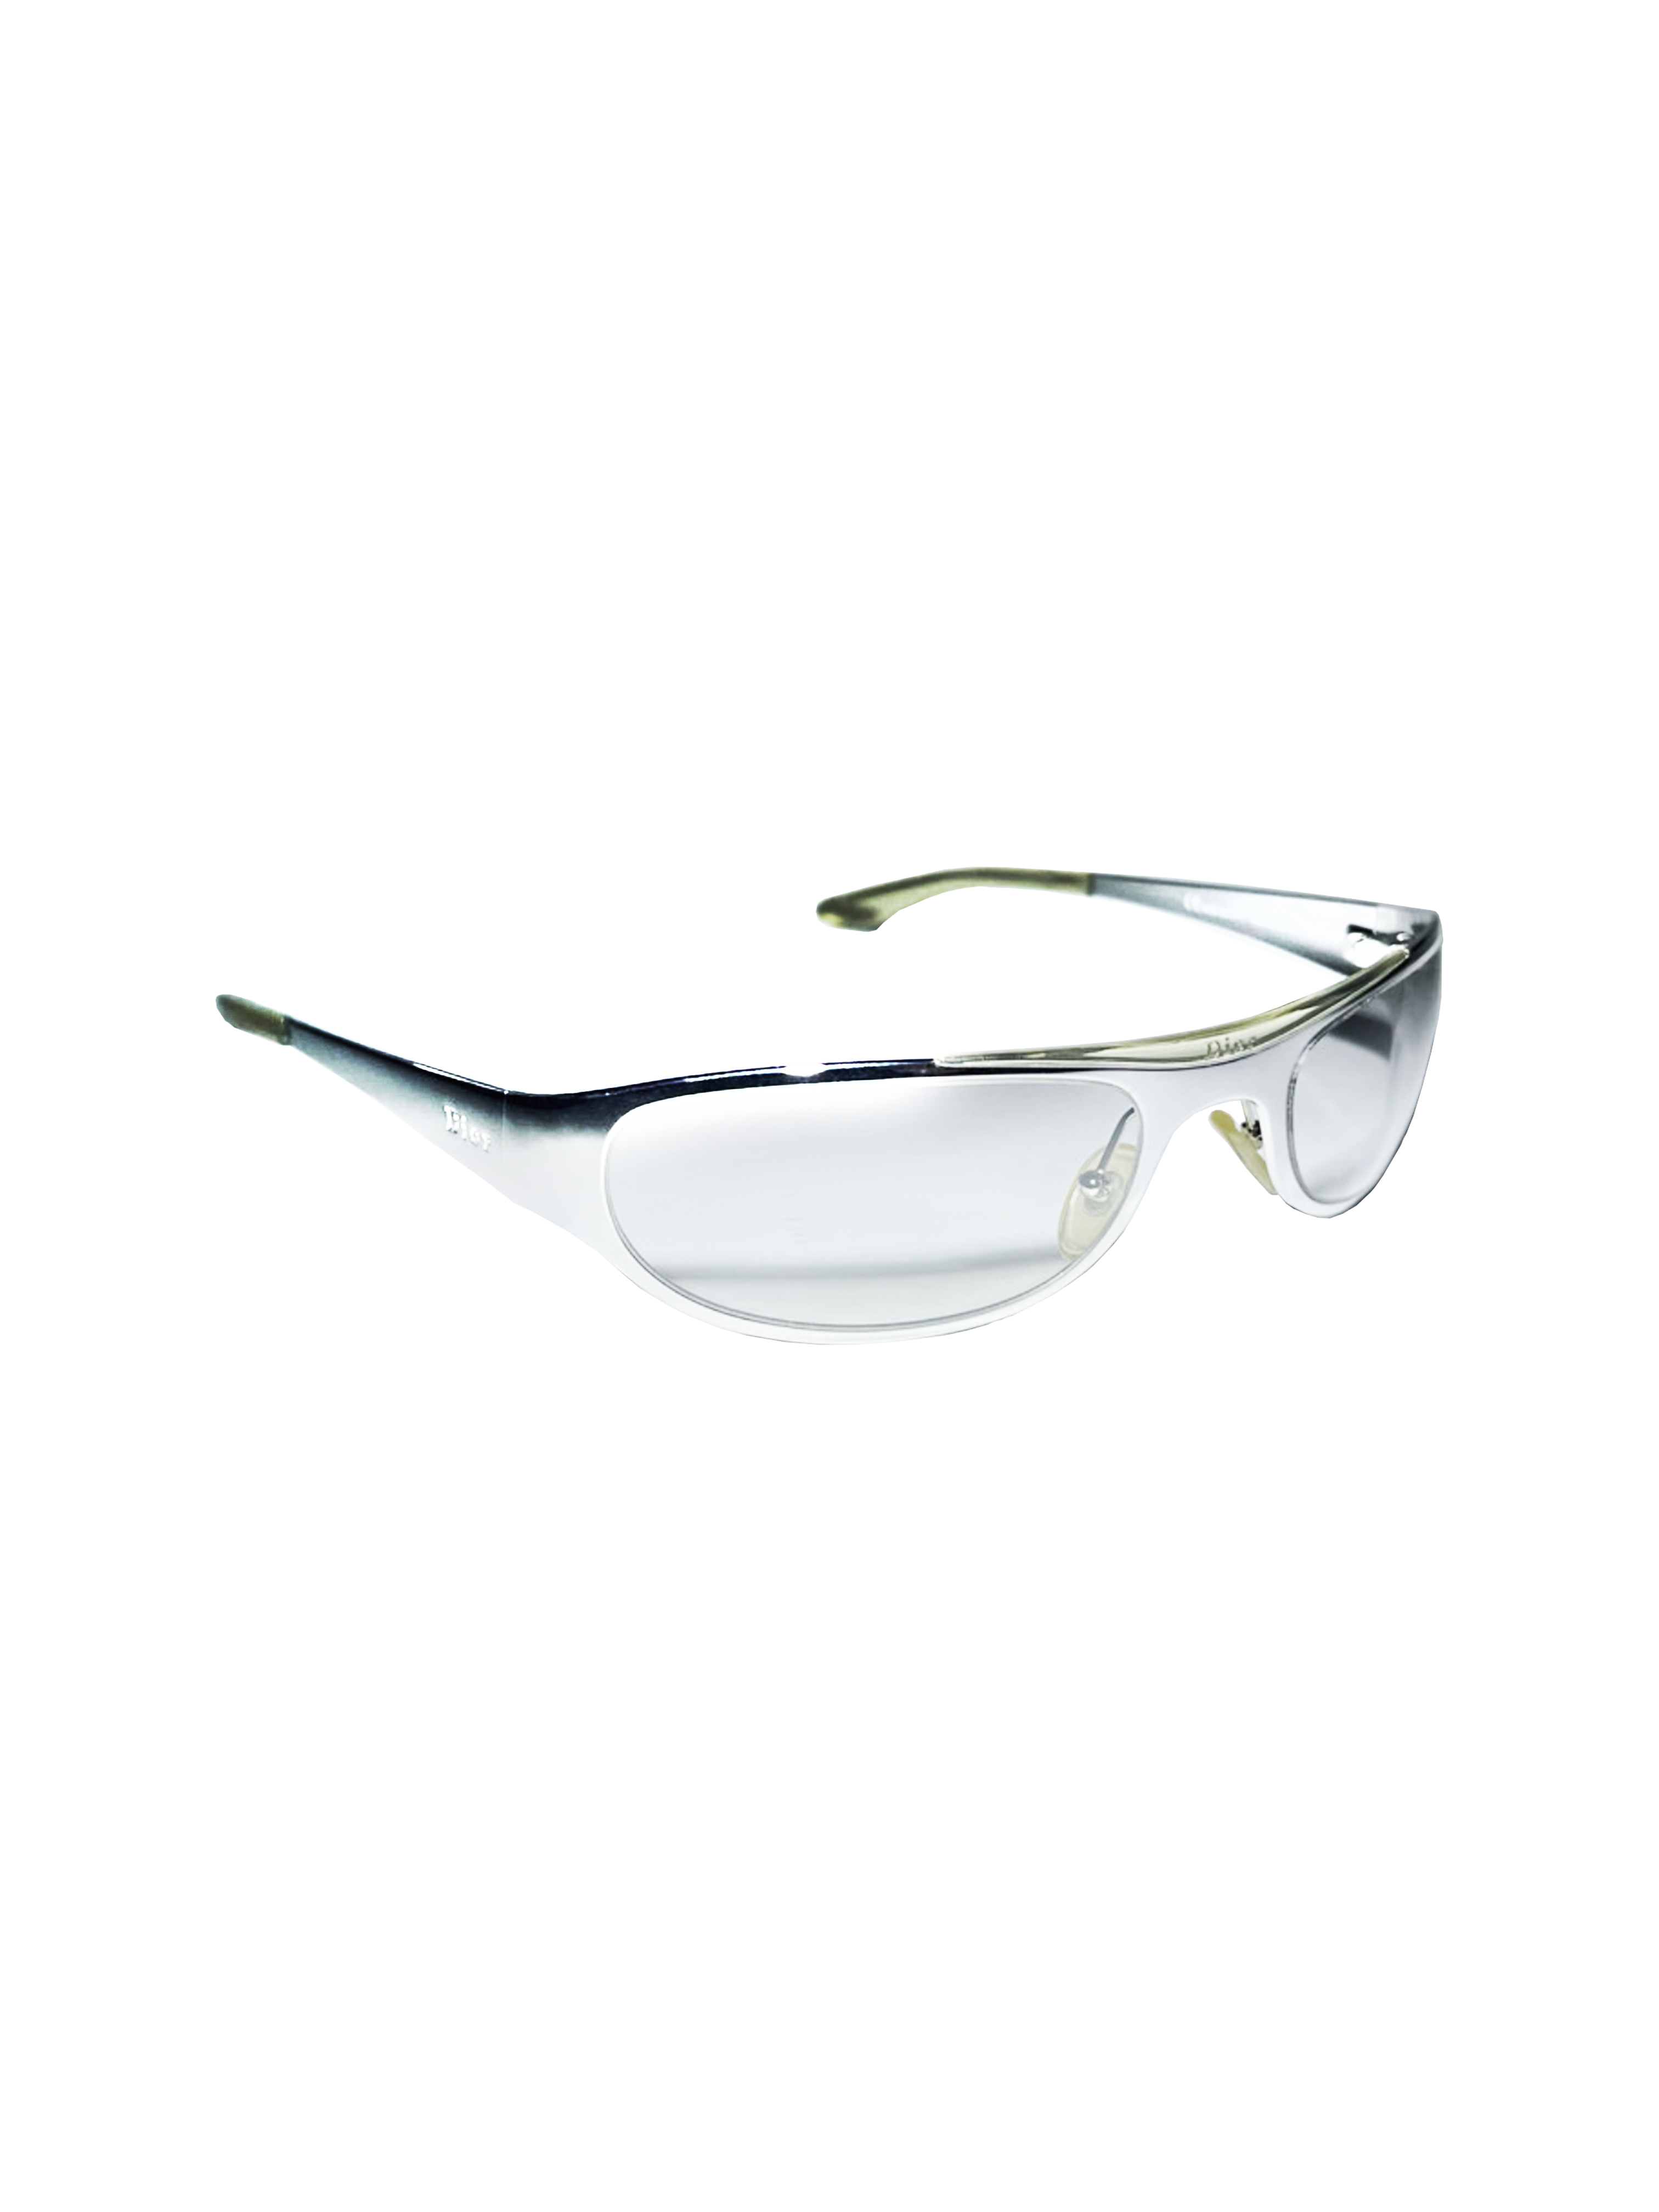 Christian Dior 2003 Safety Sunglasses